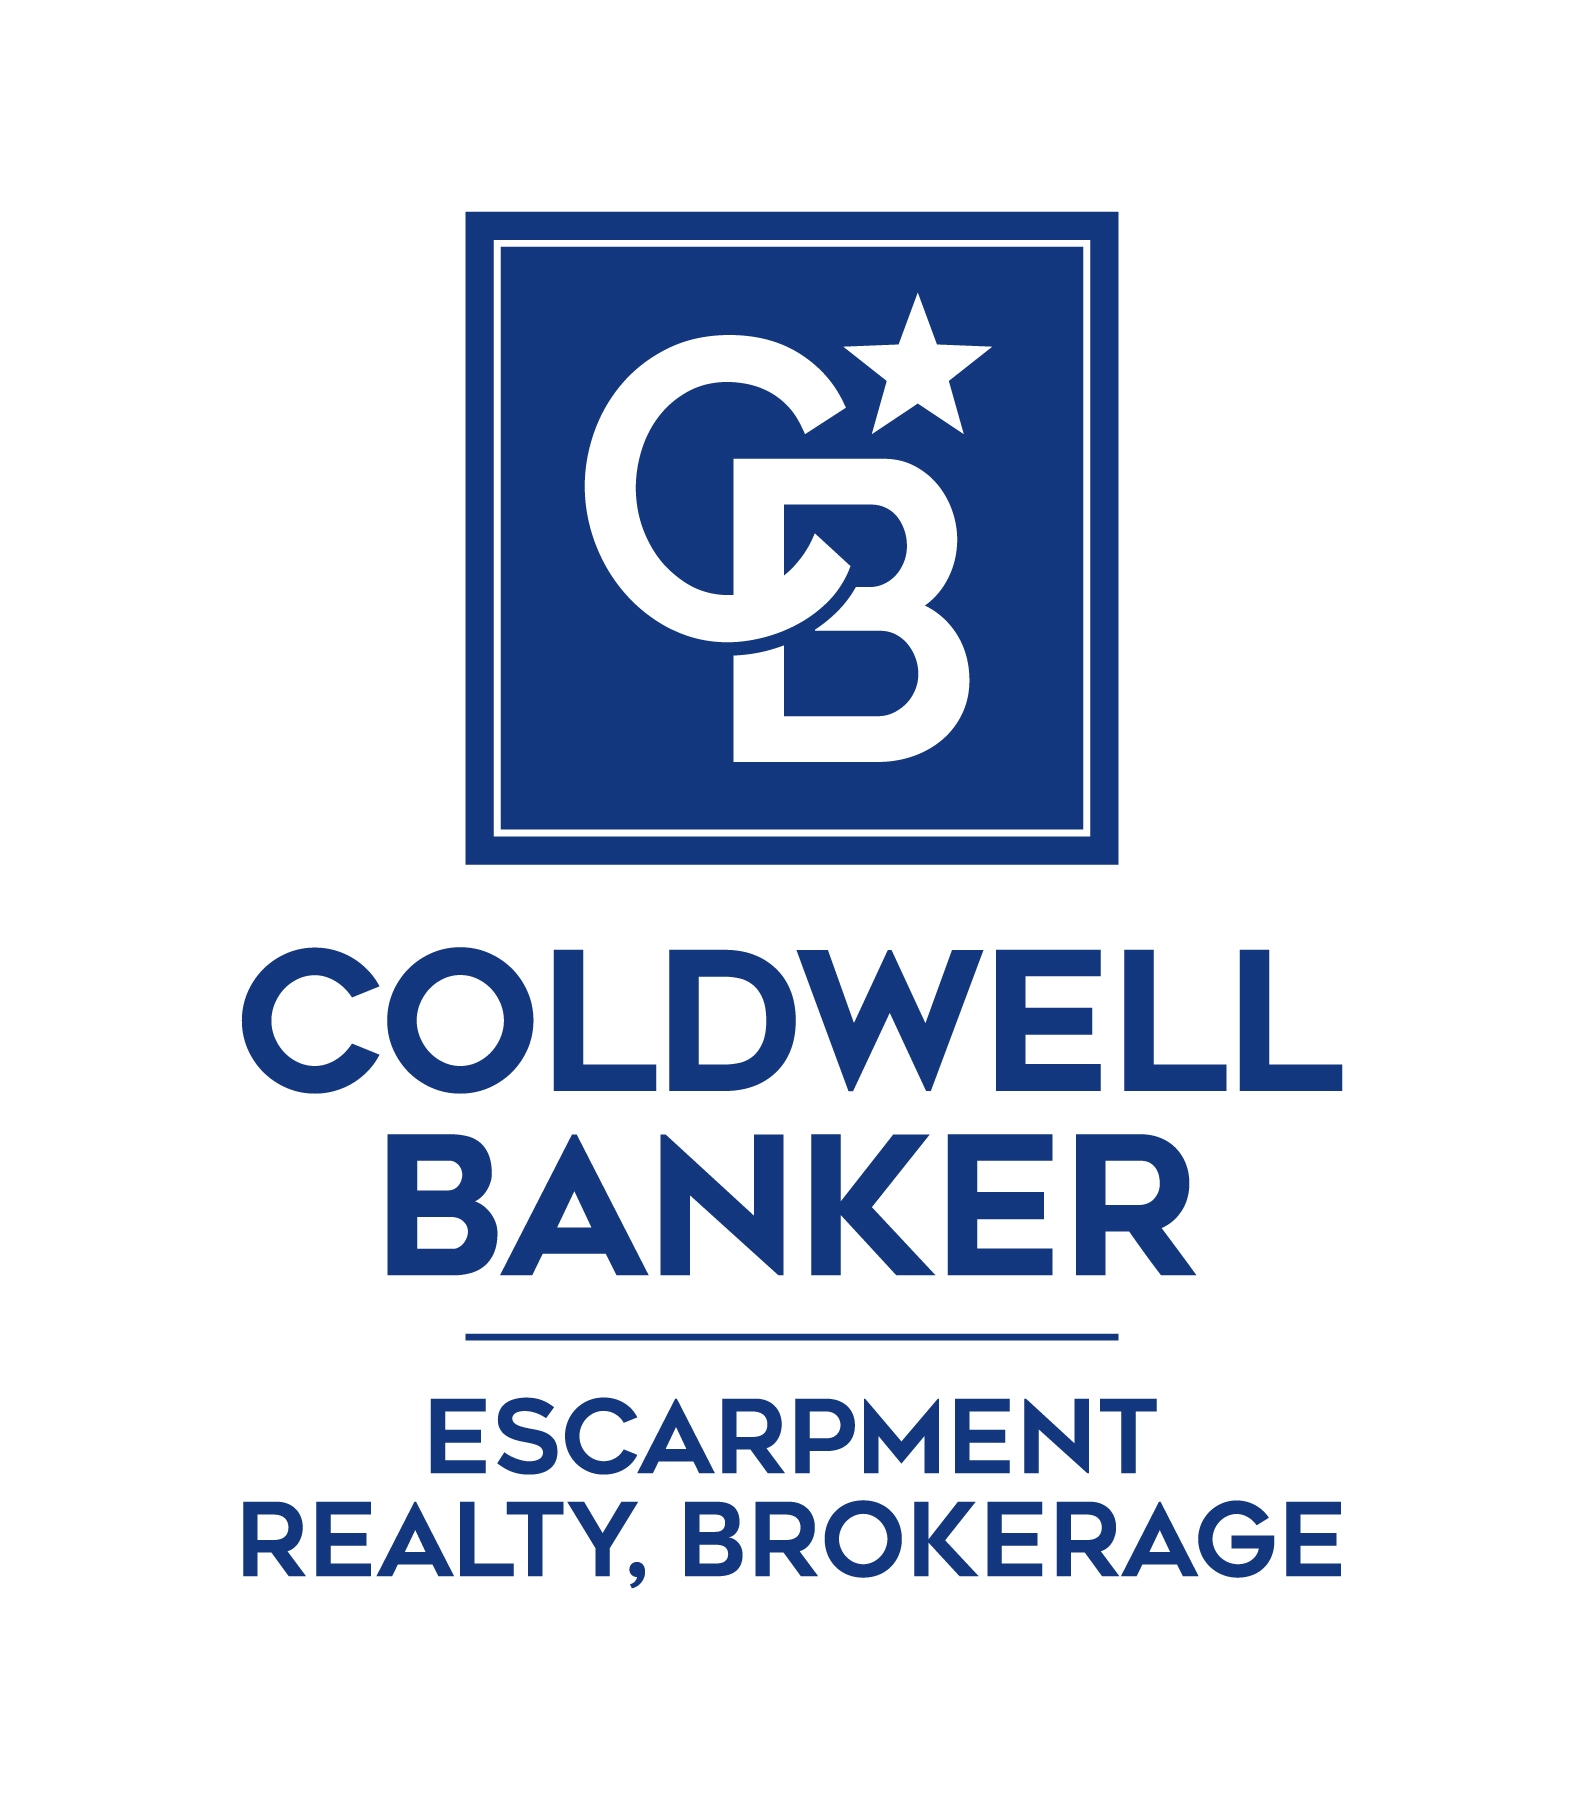 Coldwell Banker Escarpment Realty, Brokerage